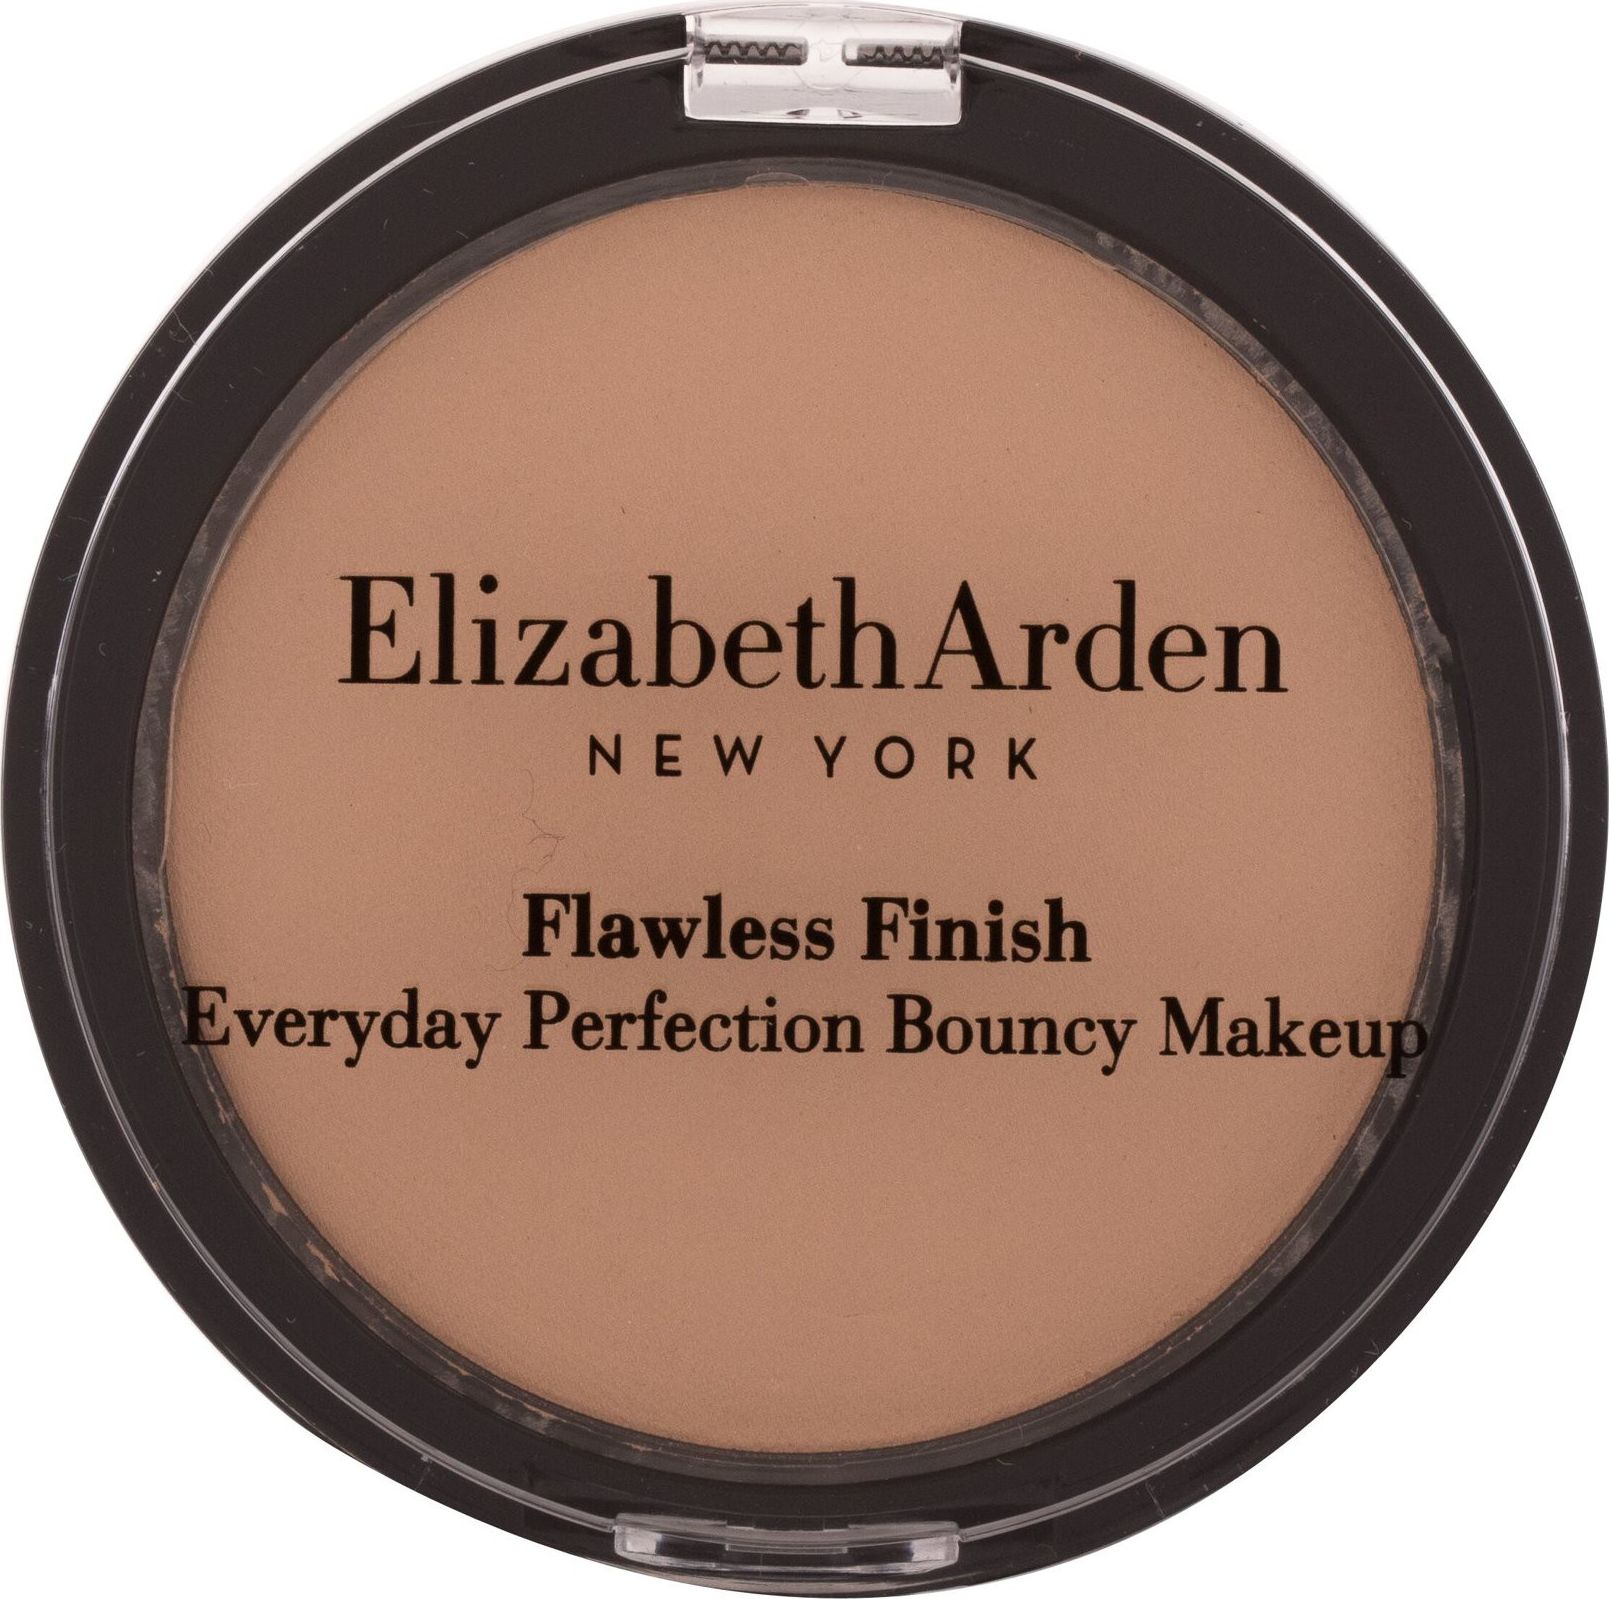 Elizabeth Arden Elizabeth Arden Flawless Finish Everyday Perfection Podklad 9g 04 Bare tester 119820 (085805562359) tonālais krēms